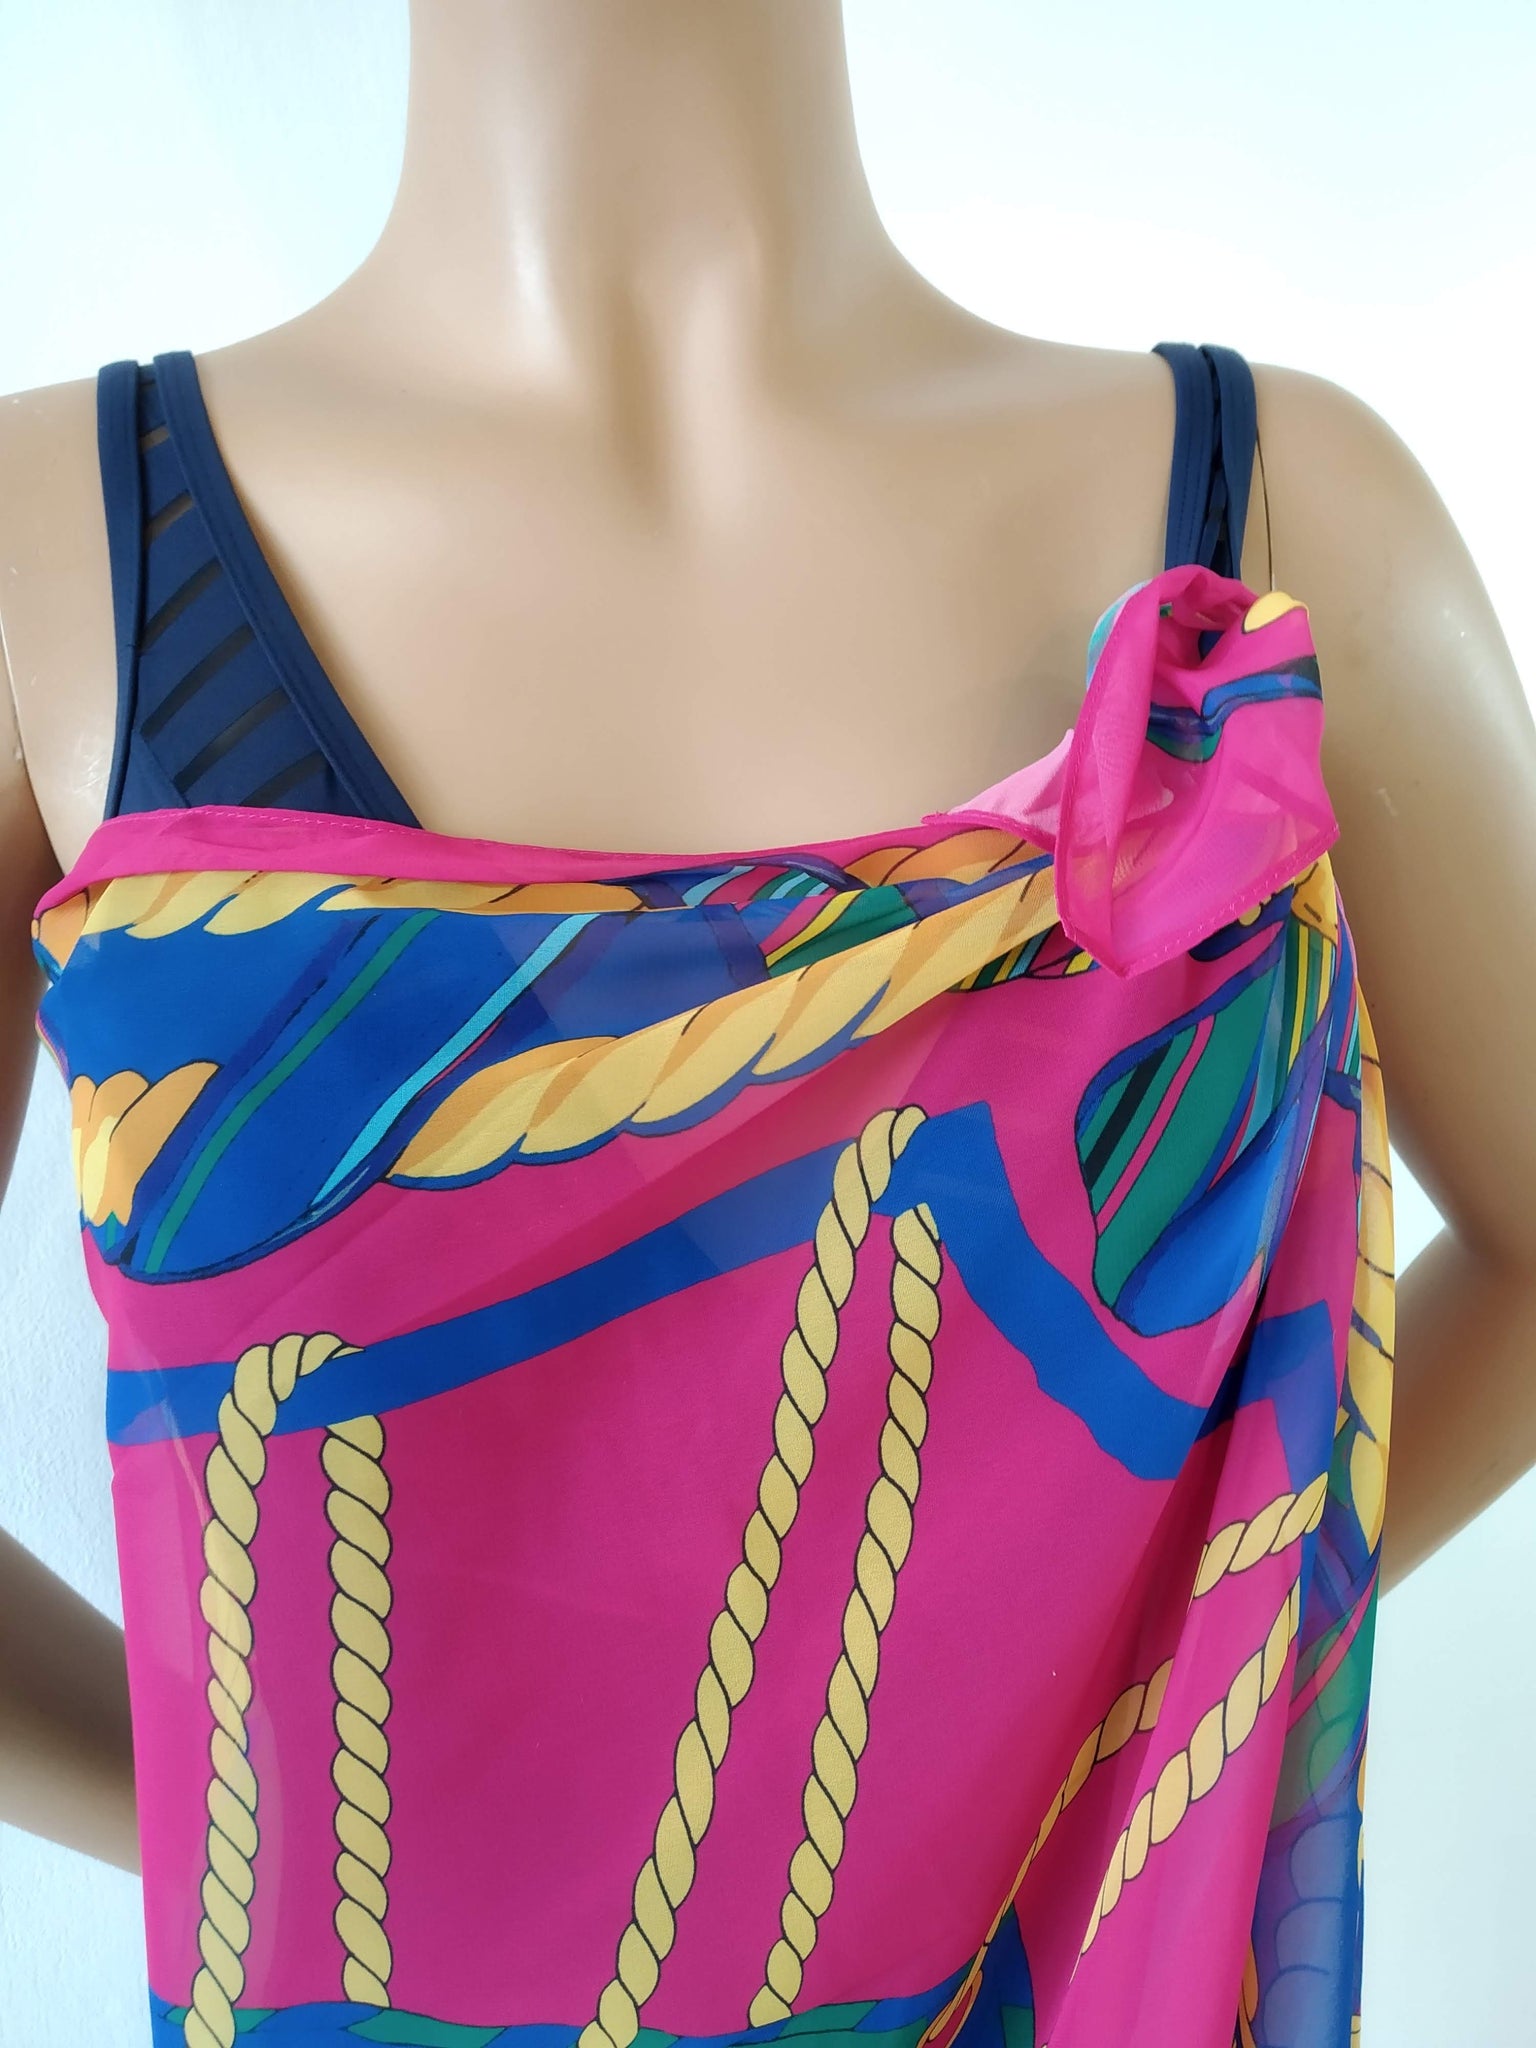 bikinn, maxi pareo sarong big size multicolor, maxi shawl dress beach ,pareo vestido,elegant pareo